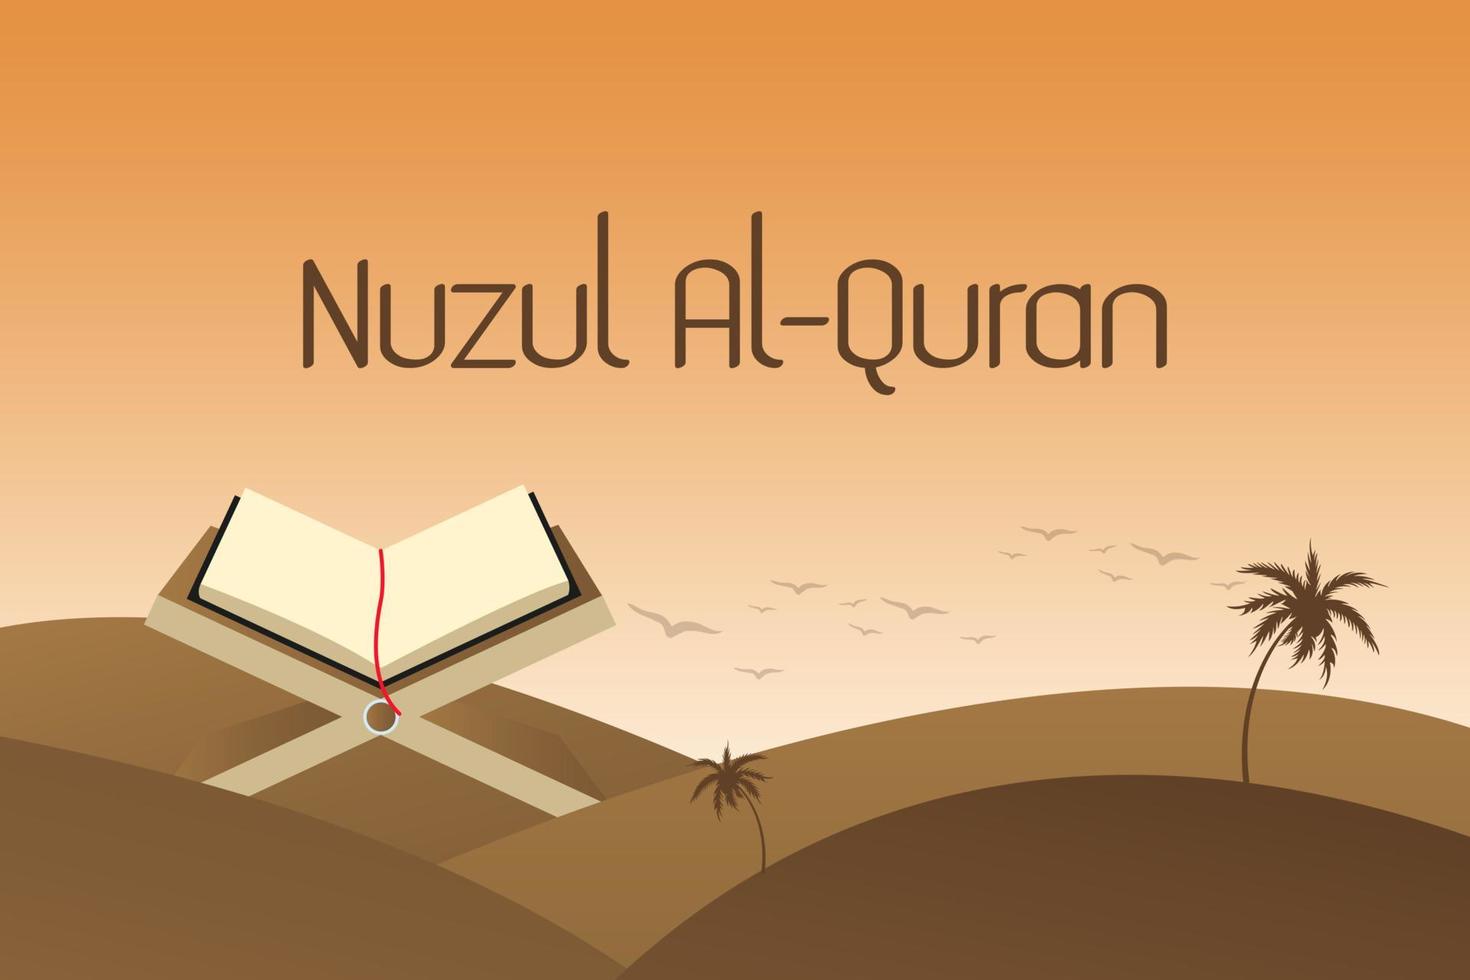 Nuzul al-Quran greeting card. Islamic holly day for muslim community celebration with ahnd drawn vintage design. vector